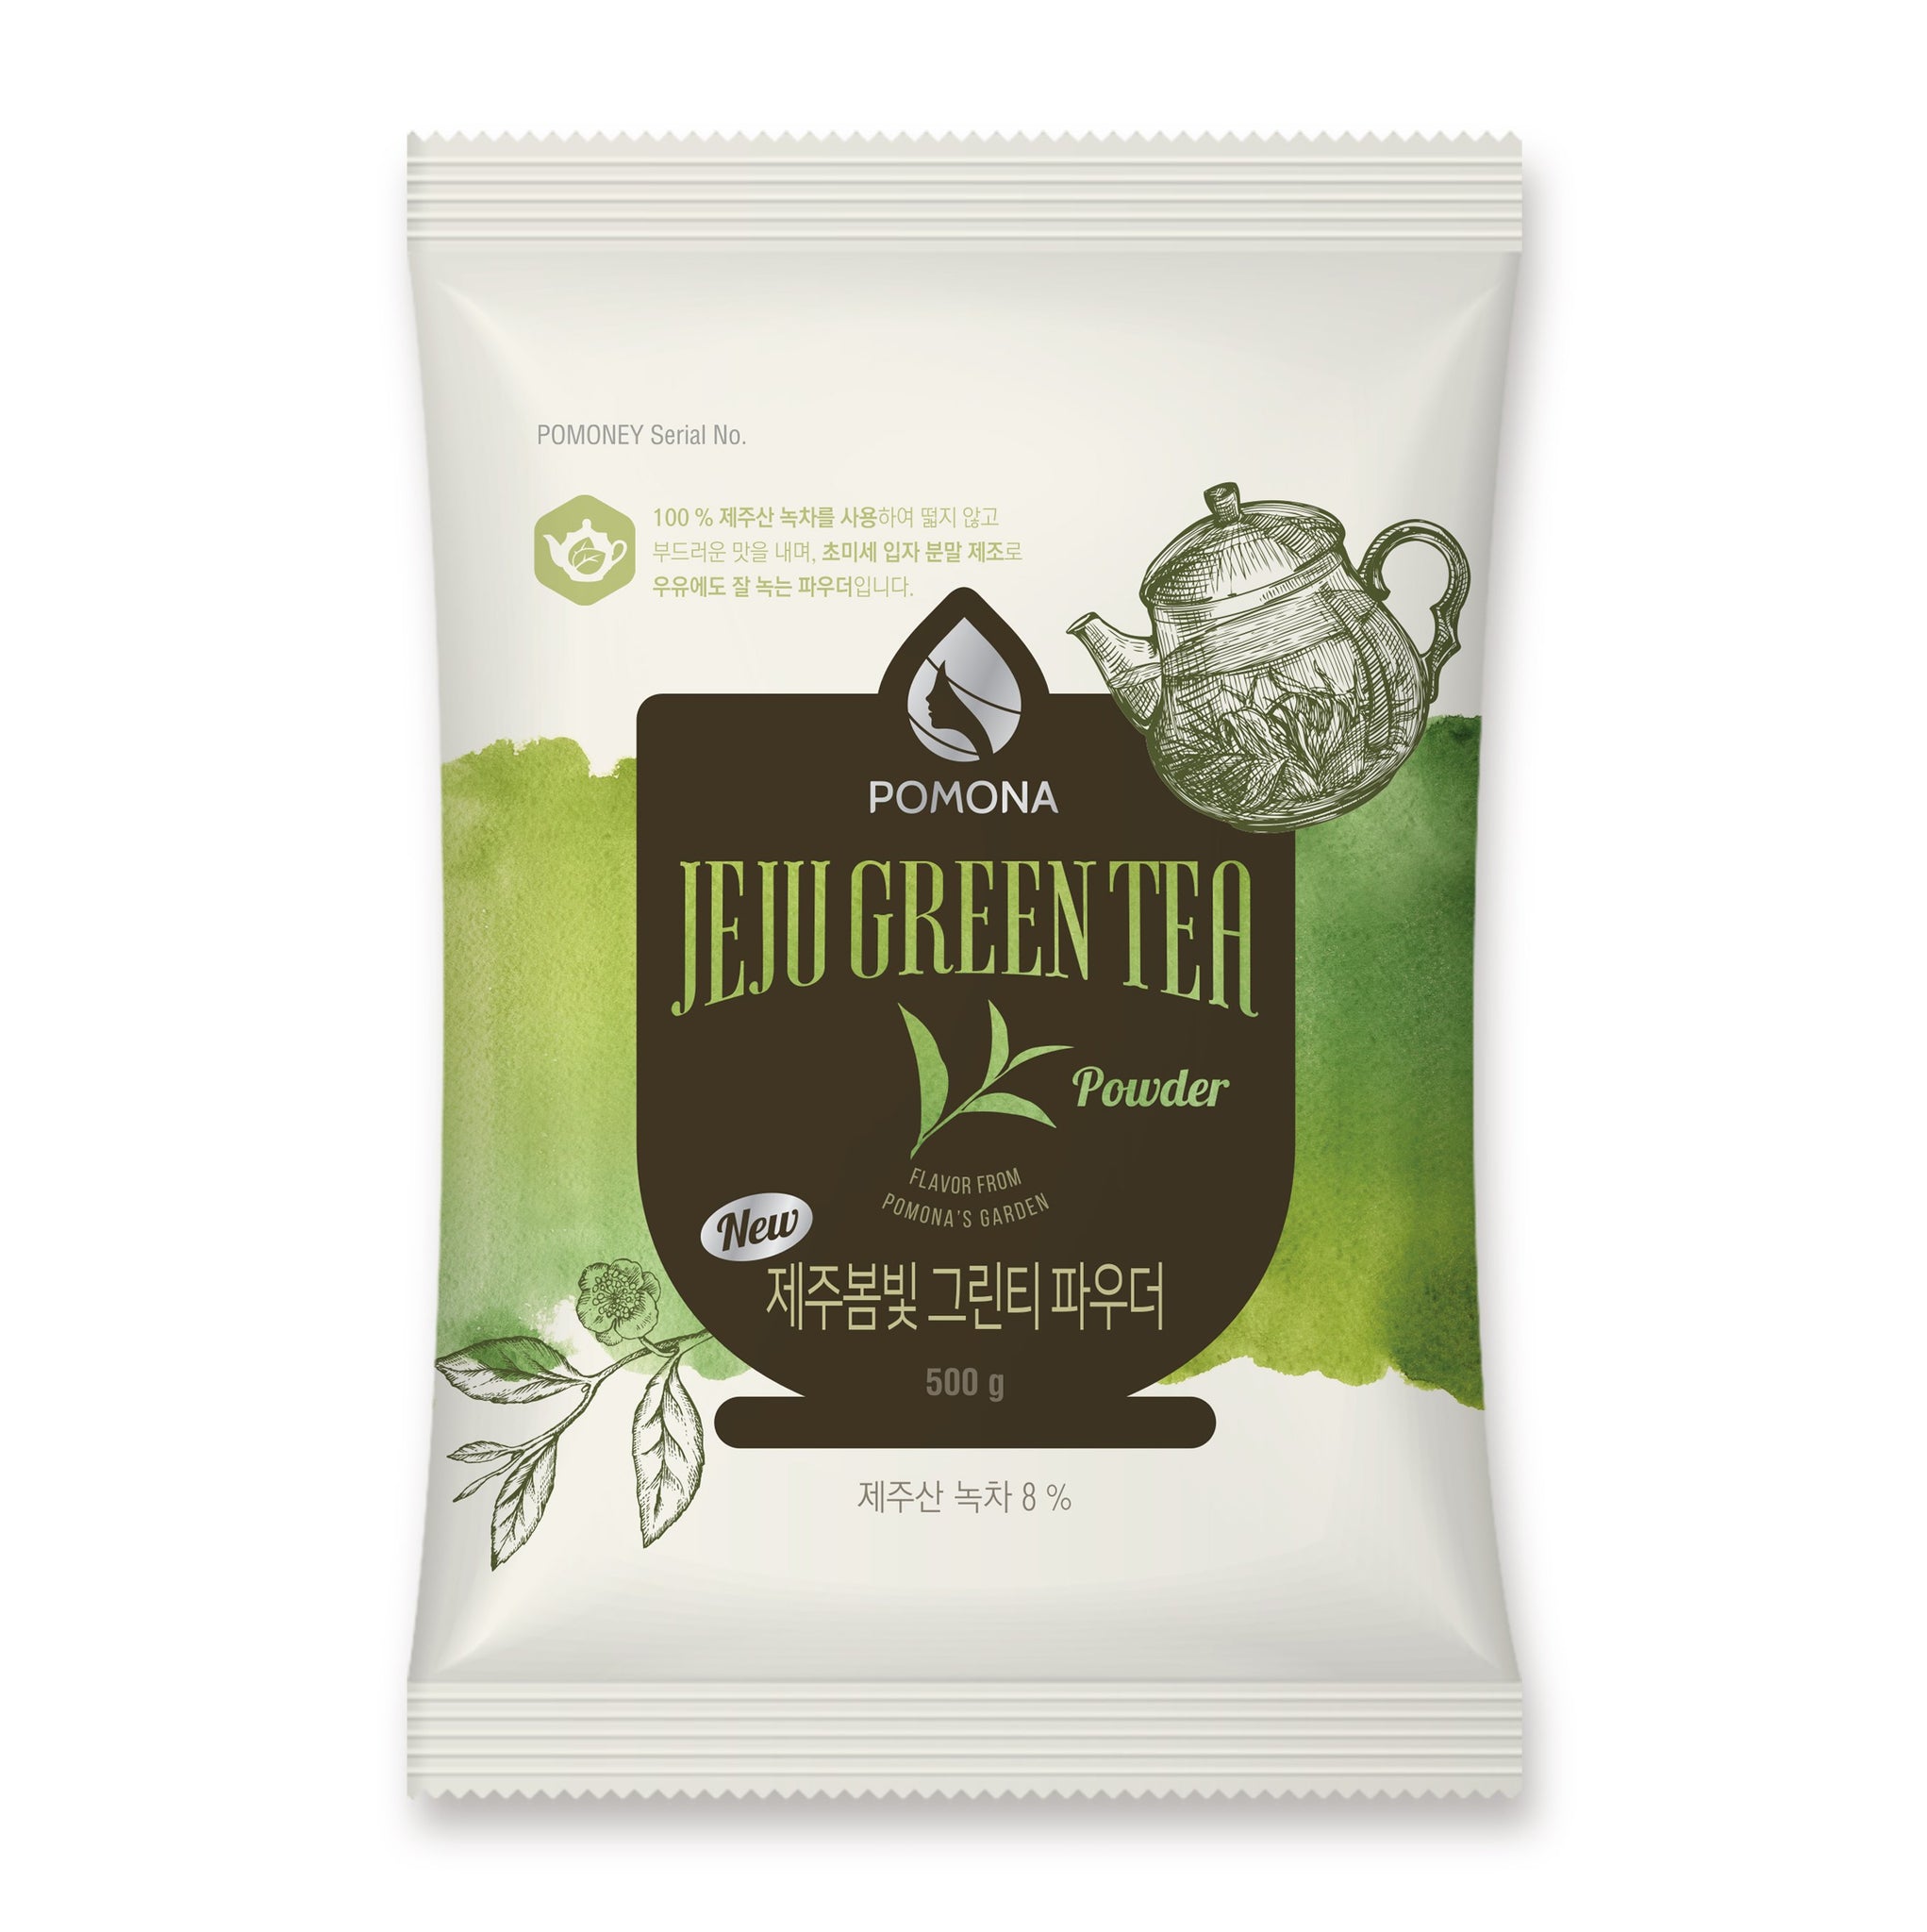 Pomona Jeju Green Tea Powder